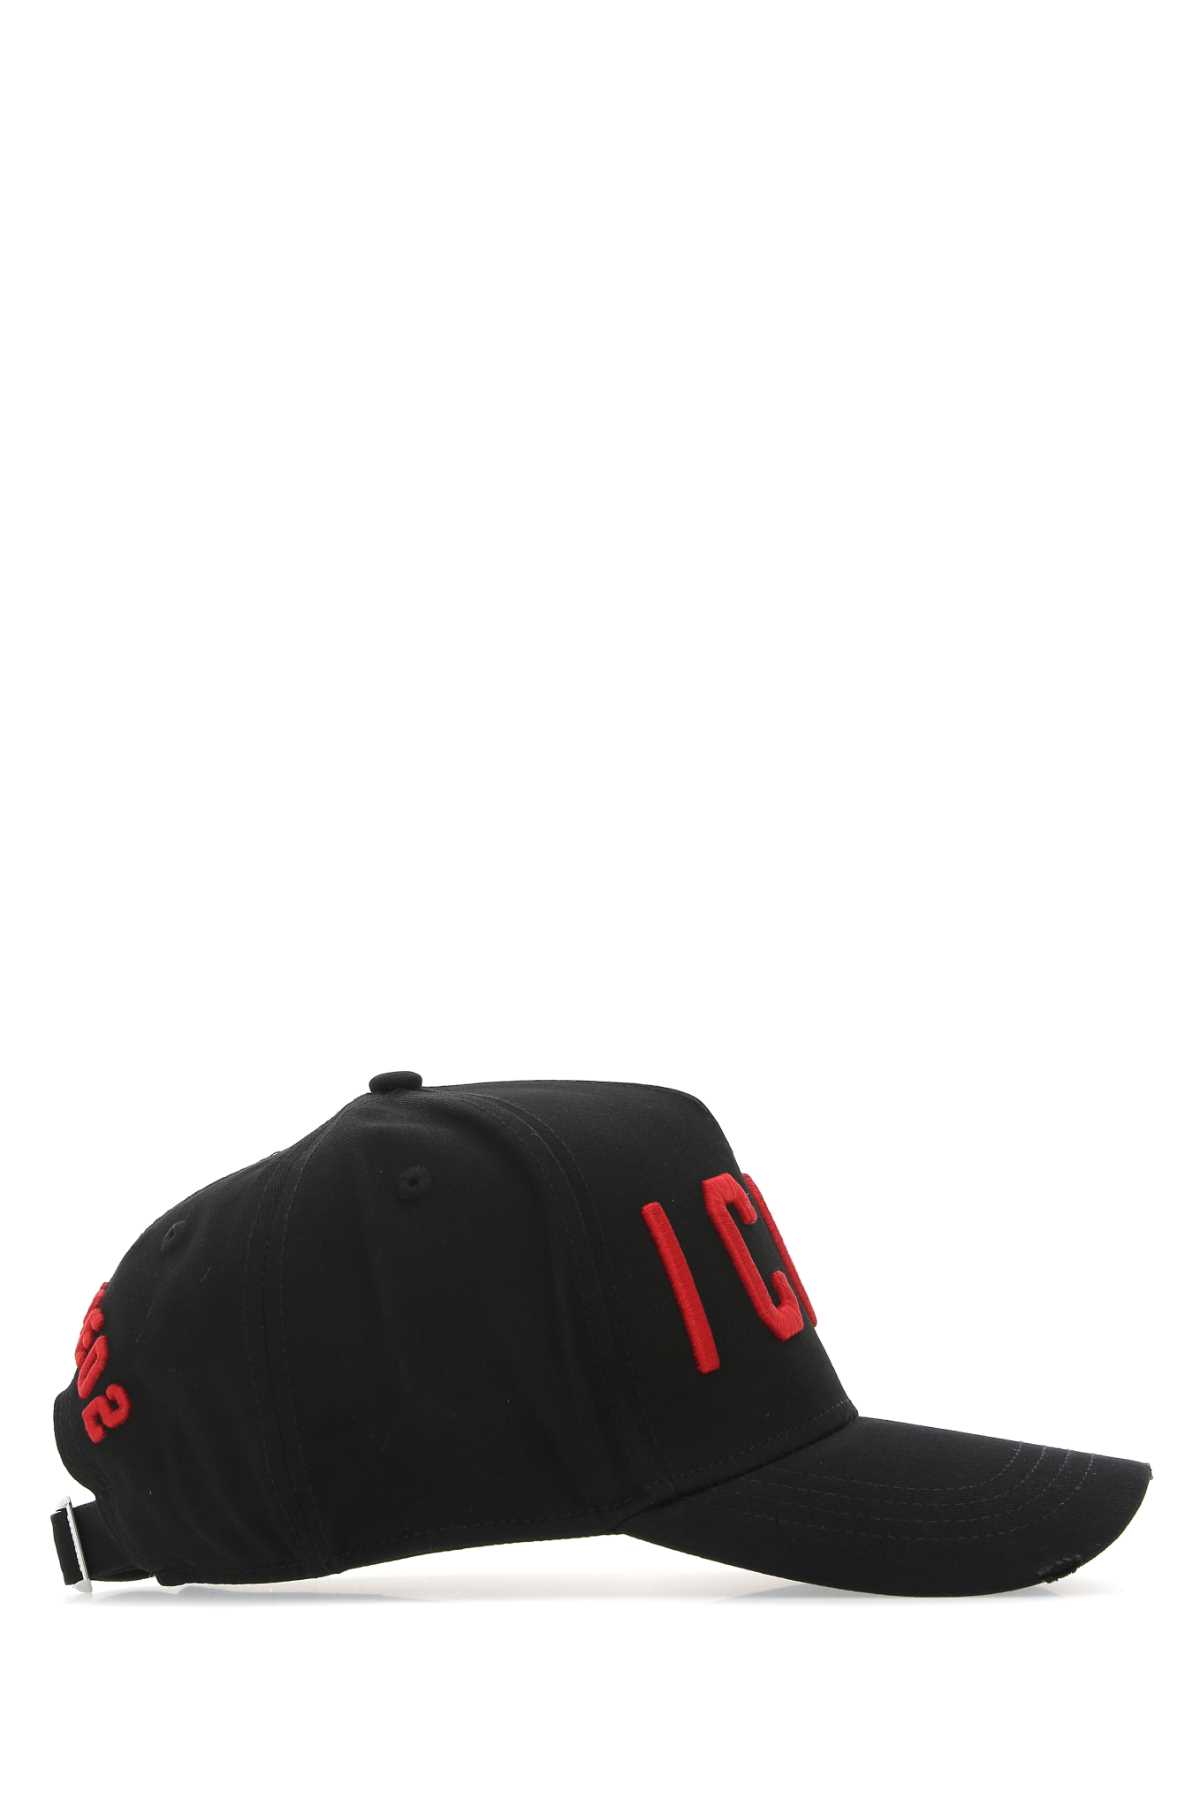 Shop Dsquared2 Black Cotton Baseball Cap In M002